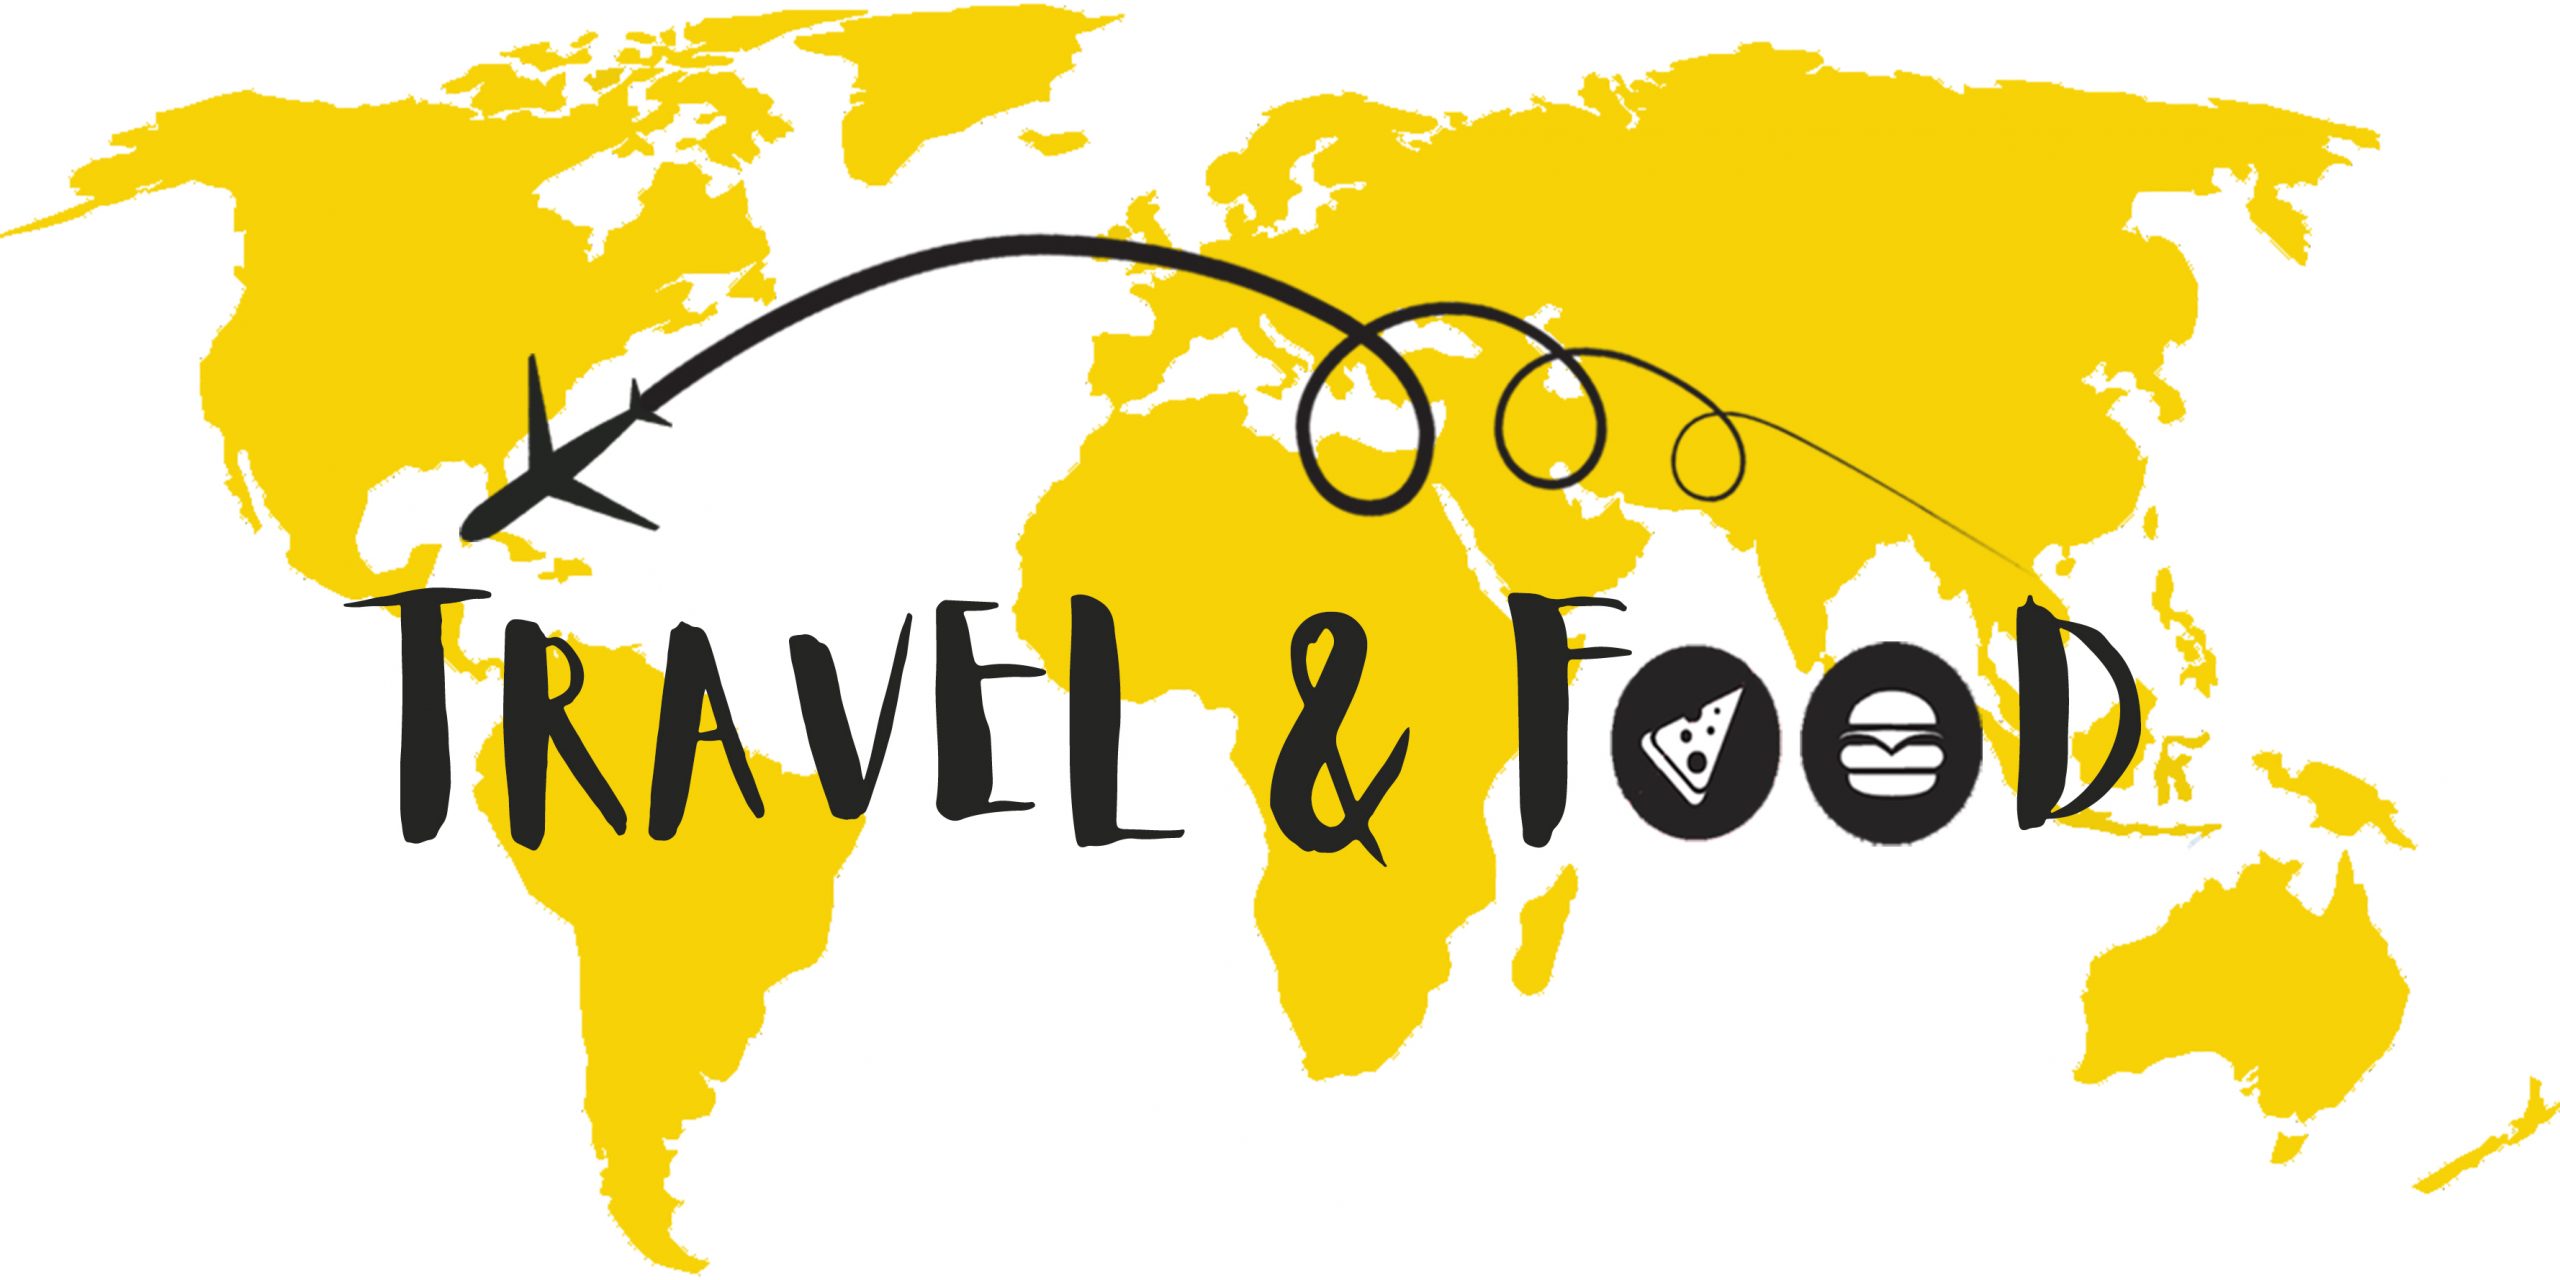 travel food services logo